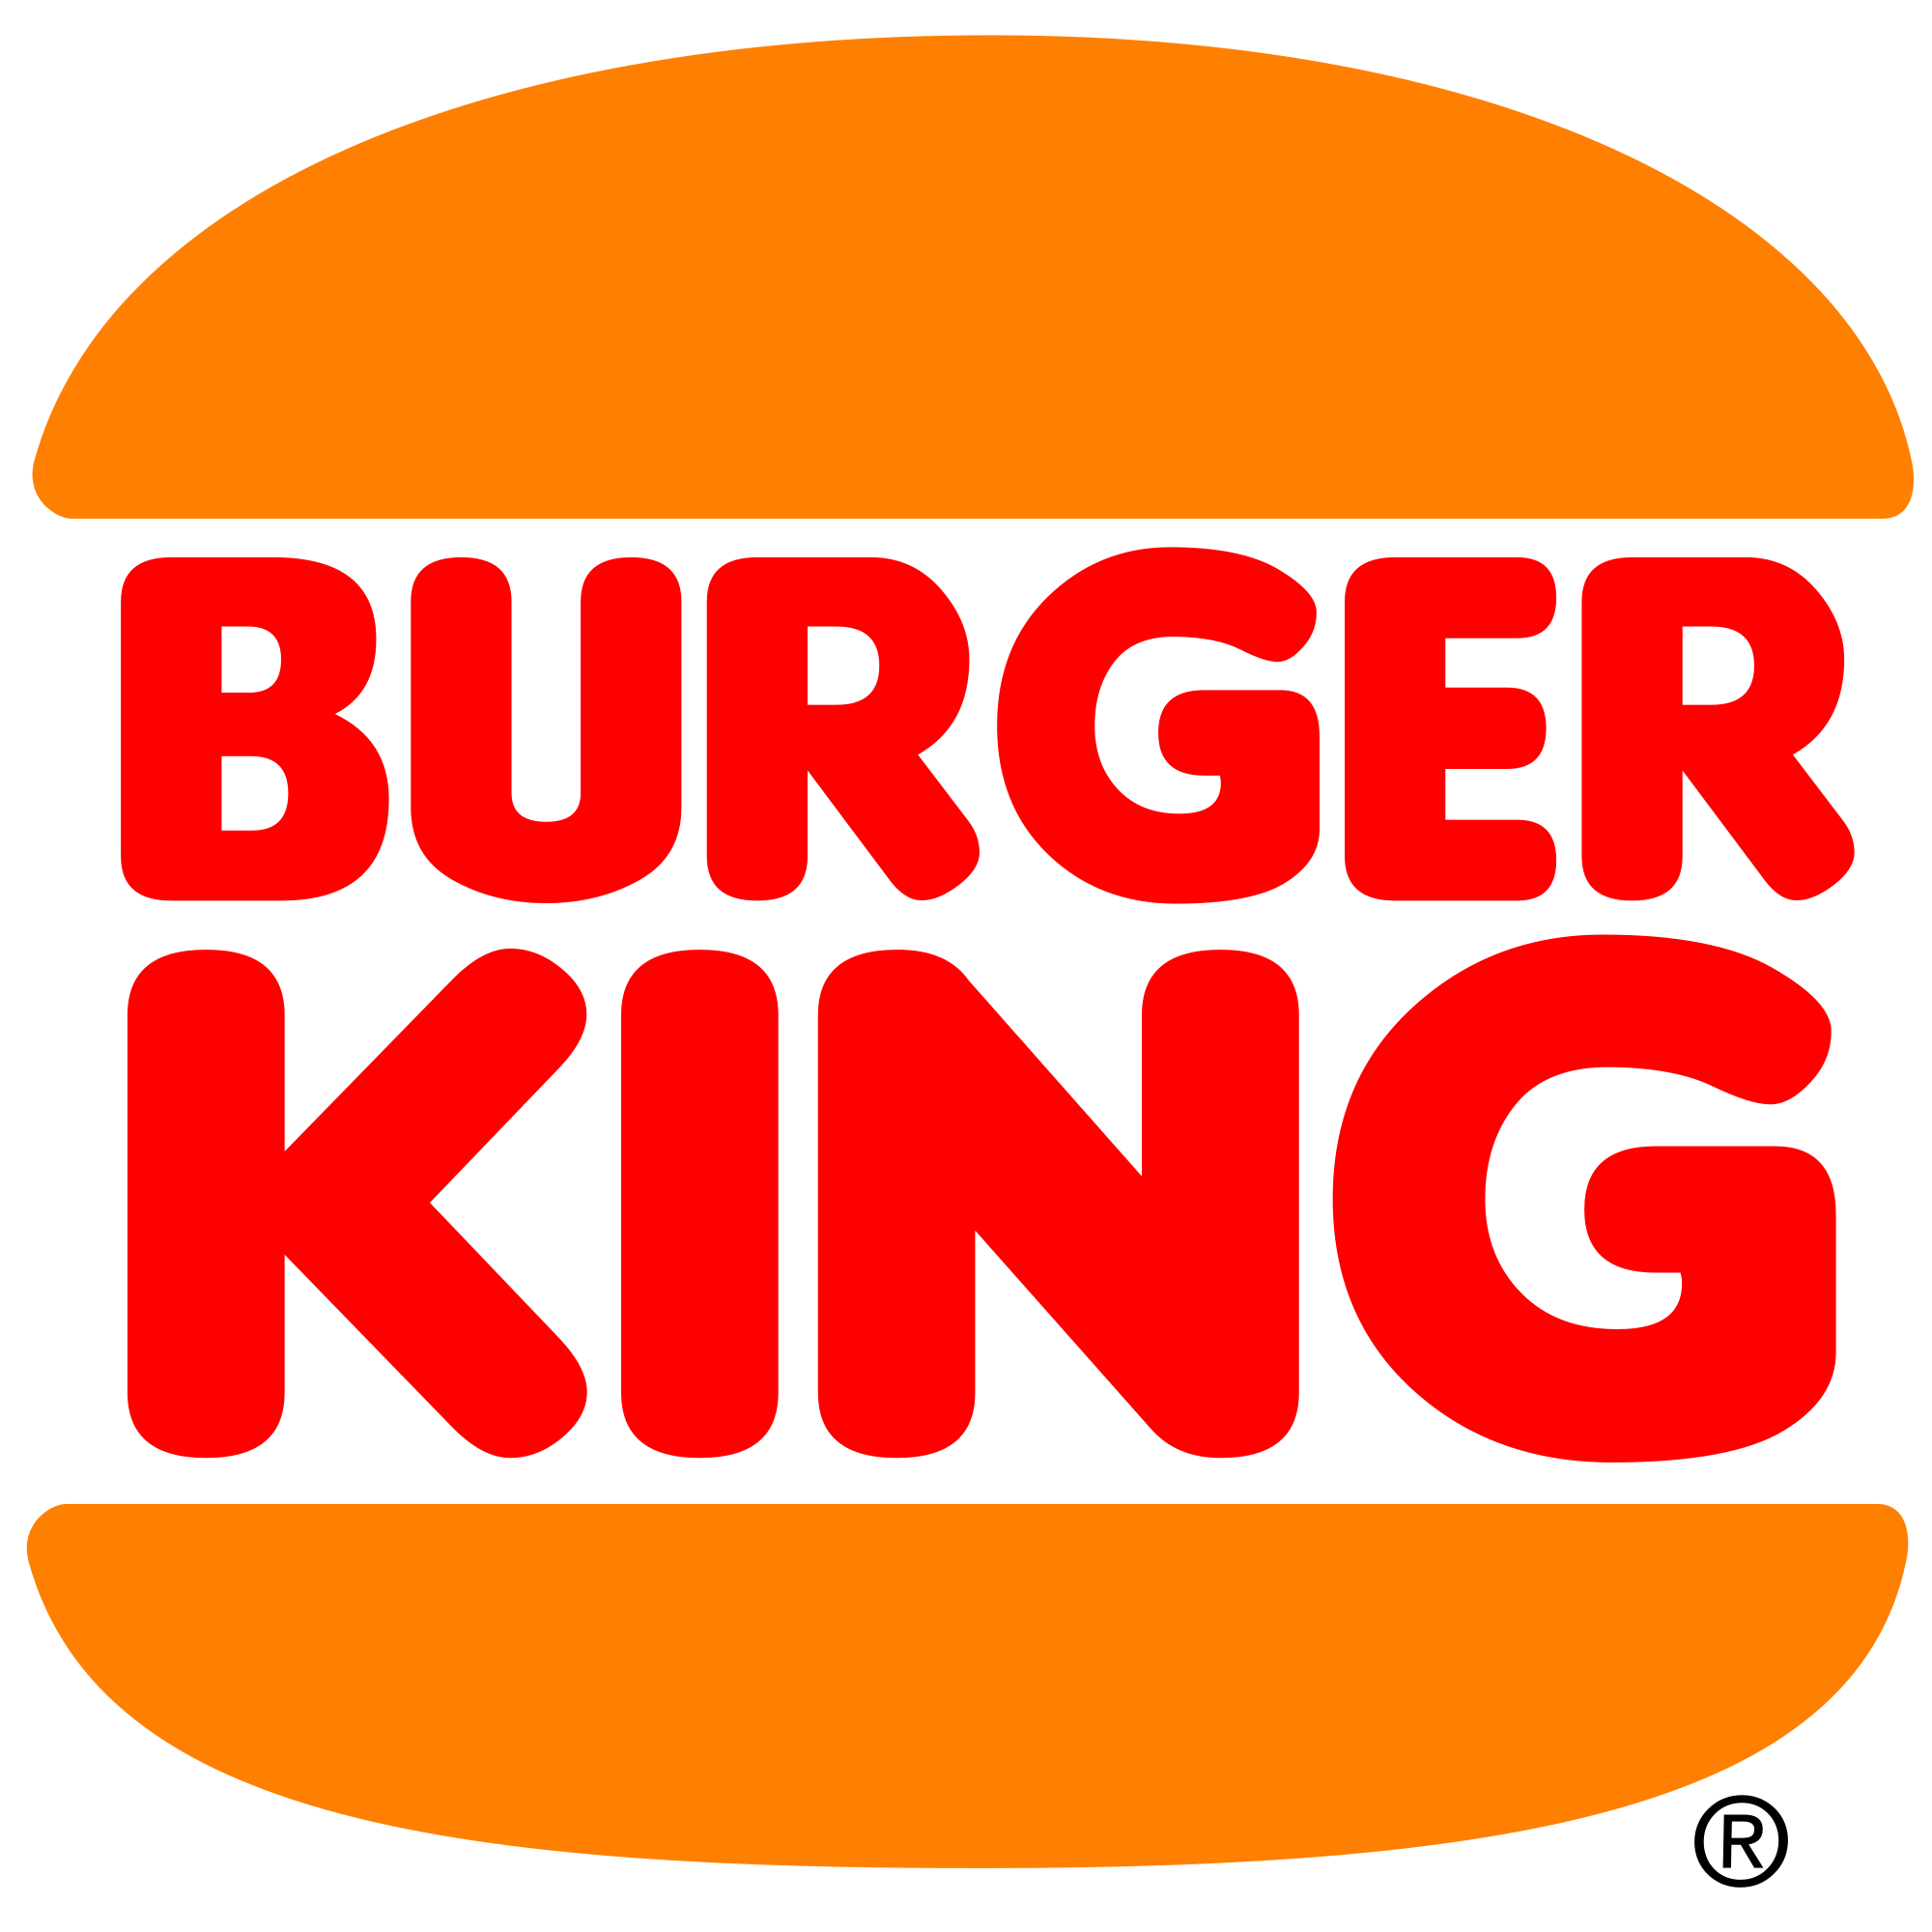 Burger King Logo PNG Transparent Burger King Logo.PNG Images. | PlusPNG